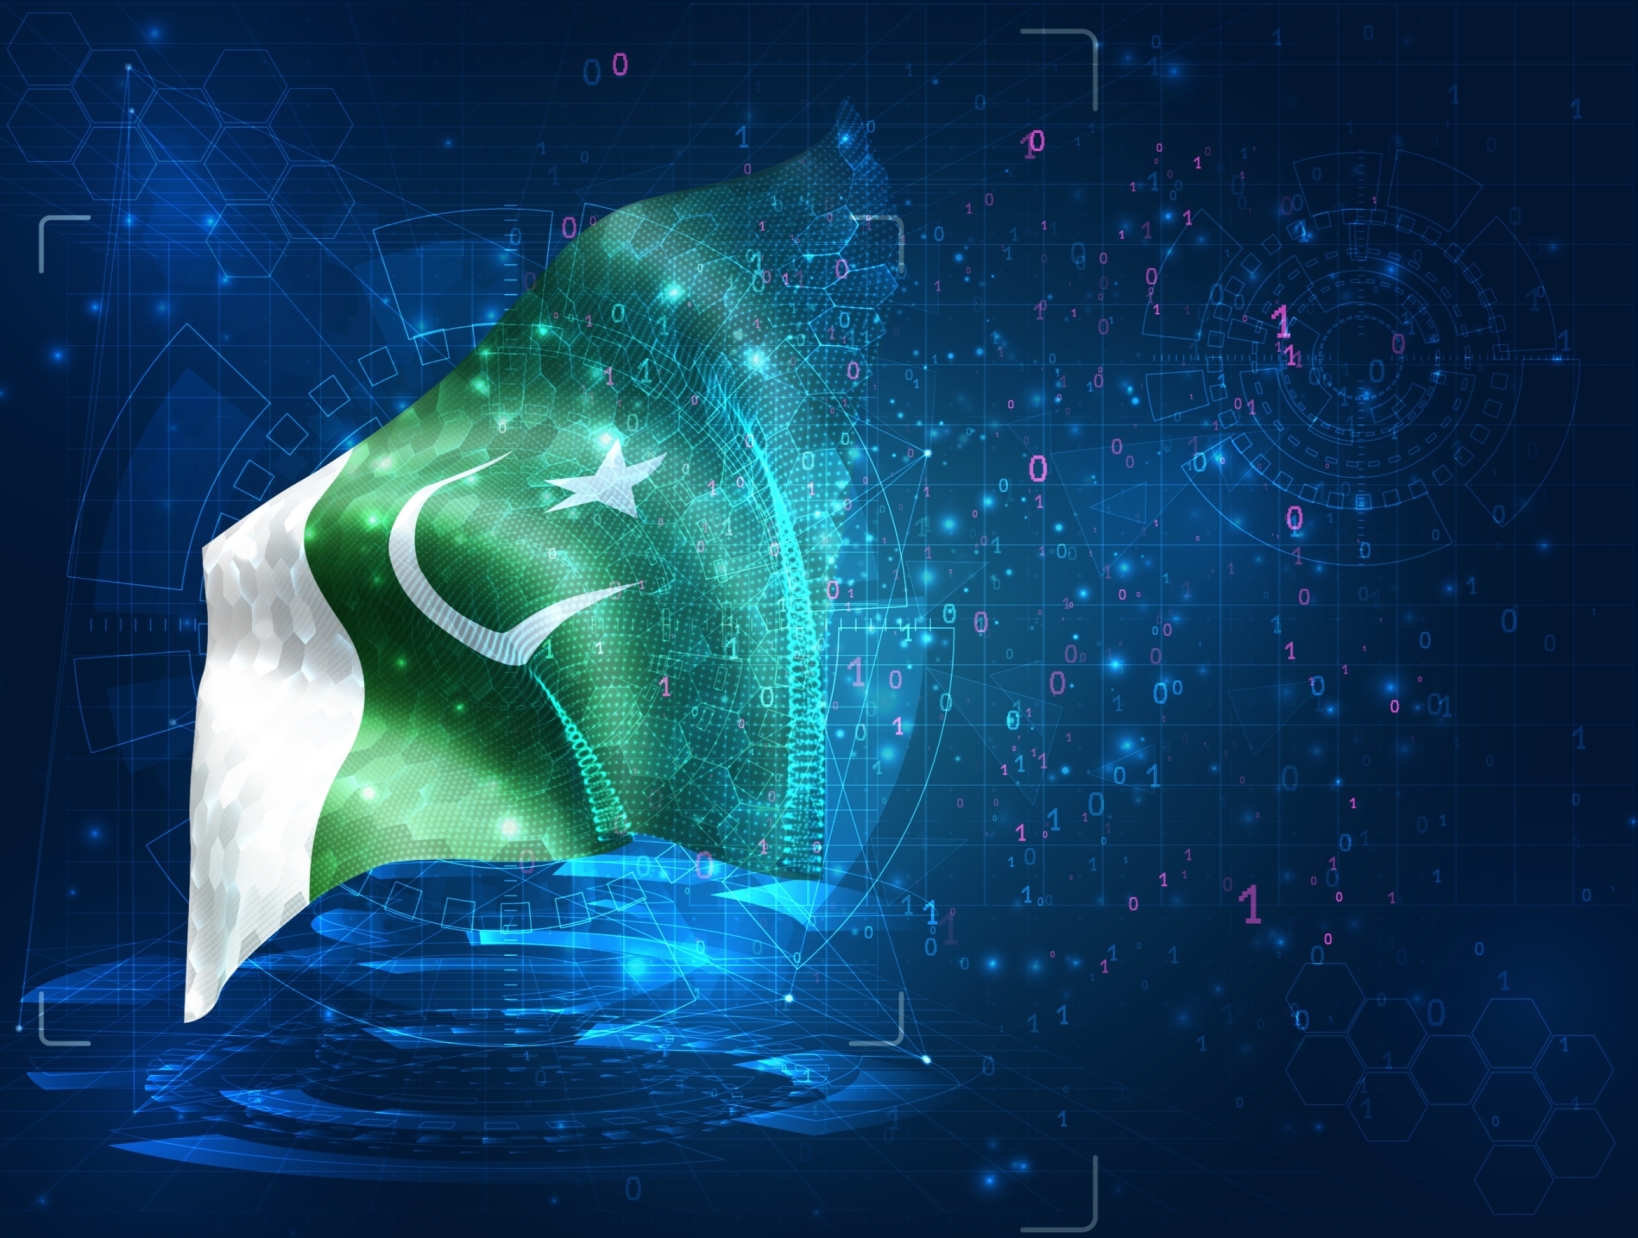 Pakistani Flag in Digital Domain